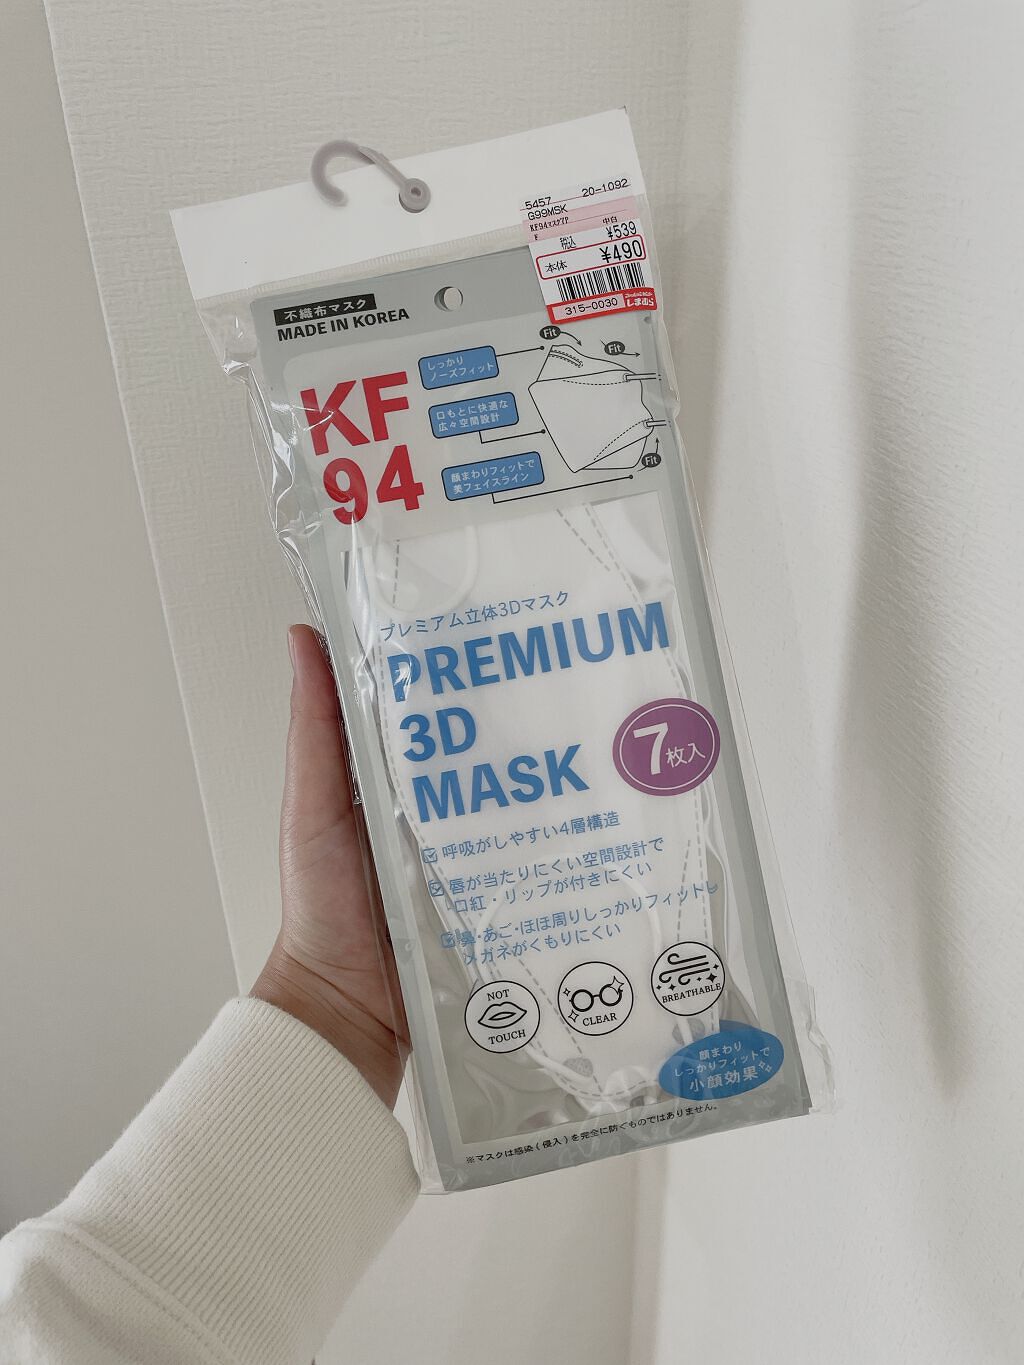 Kf94 プレミアム立体3dマスク しまむらの口コミ Kf94プレミアム立体3dマスクですブラン By みーー 敏感肌 代後半 Lips